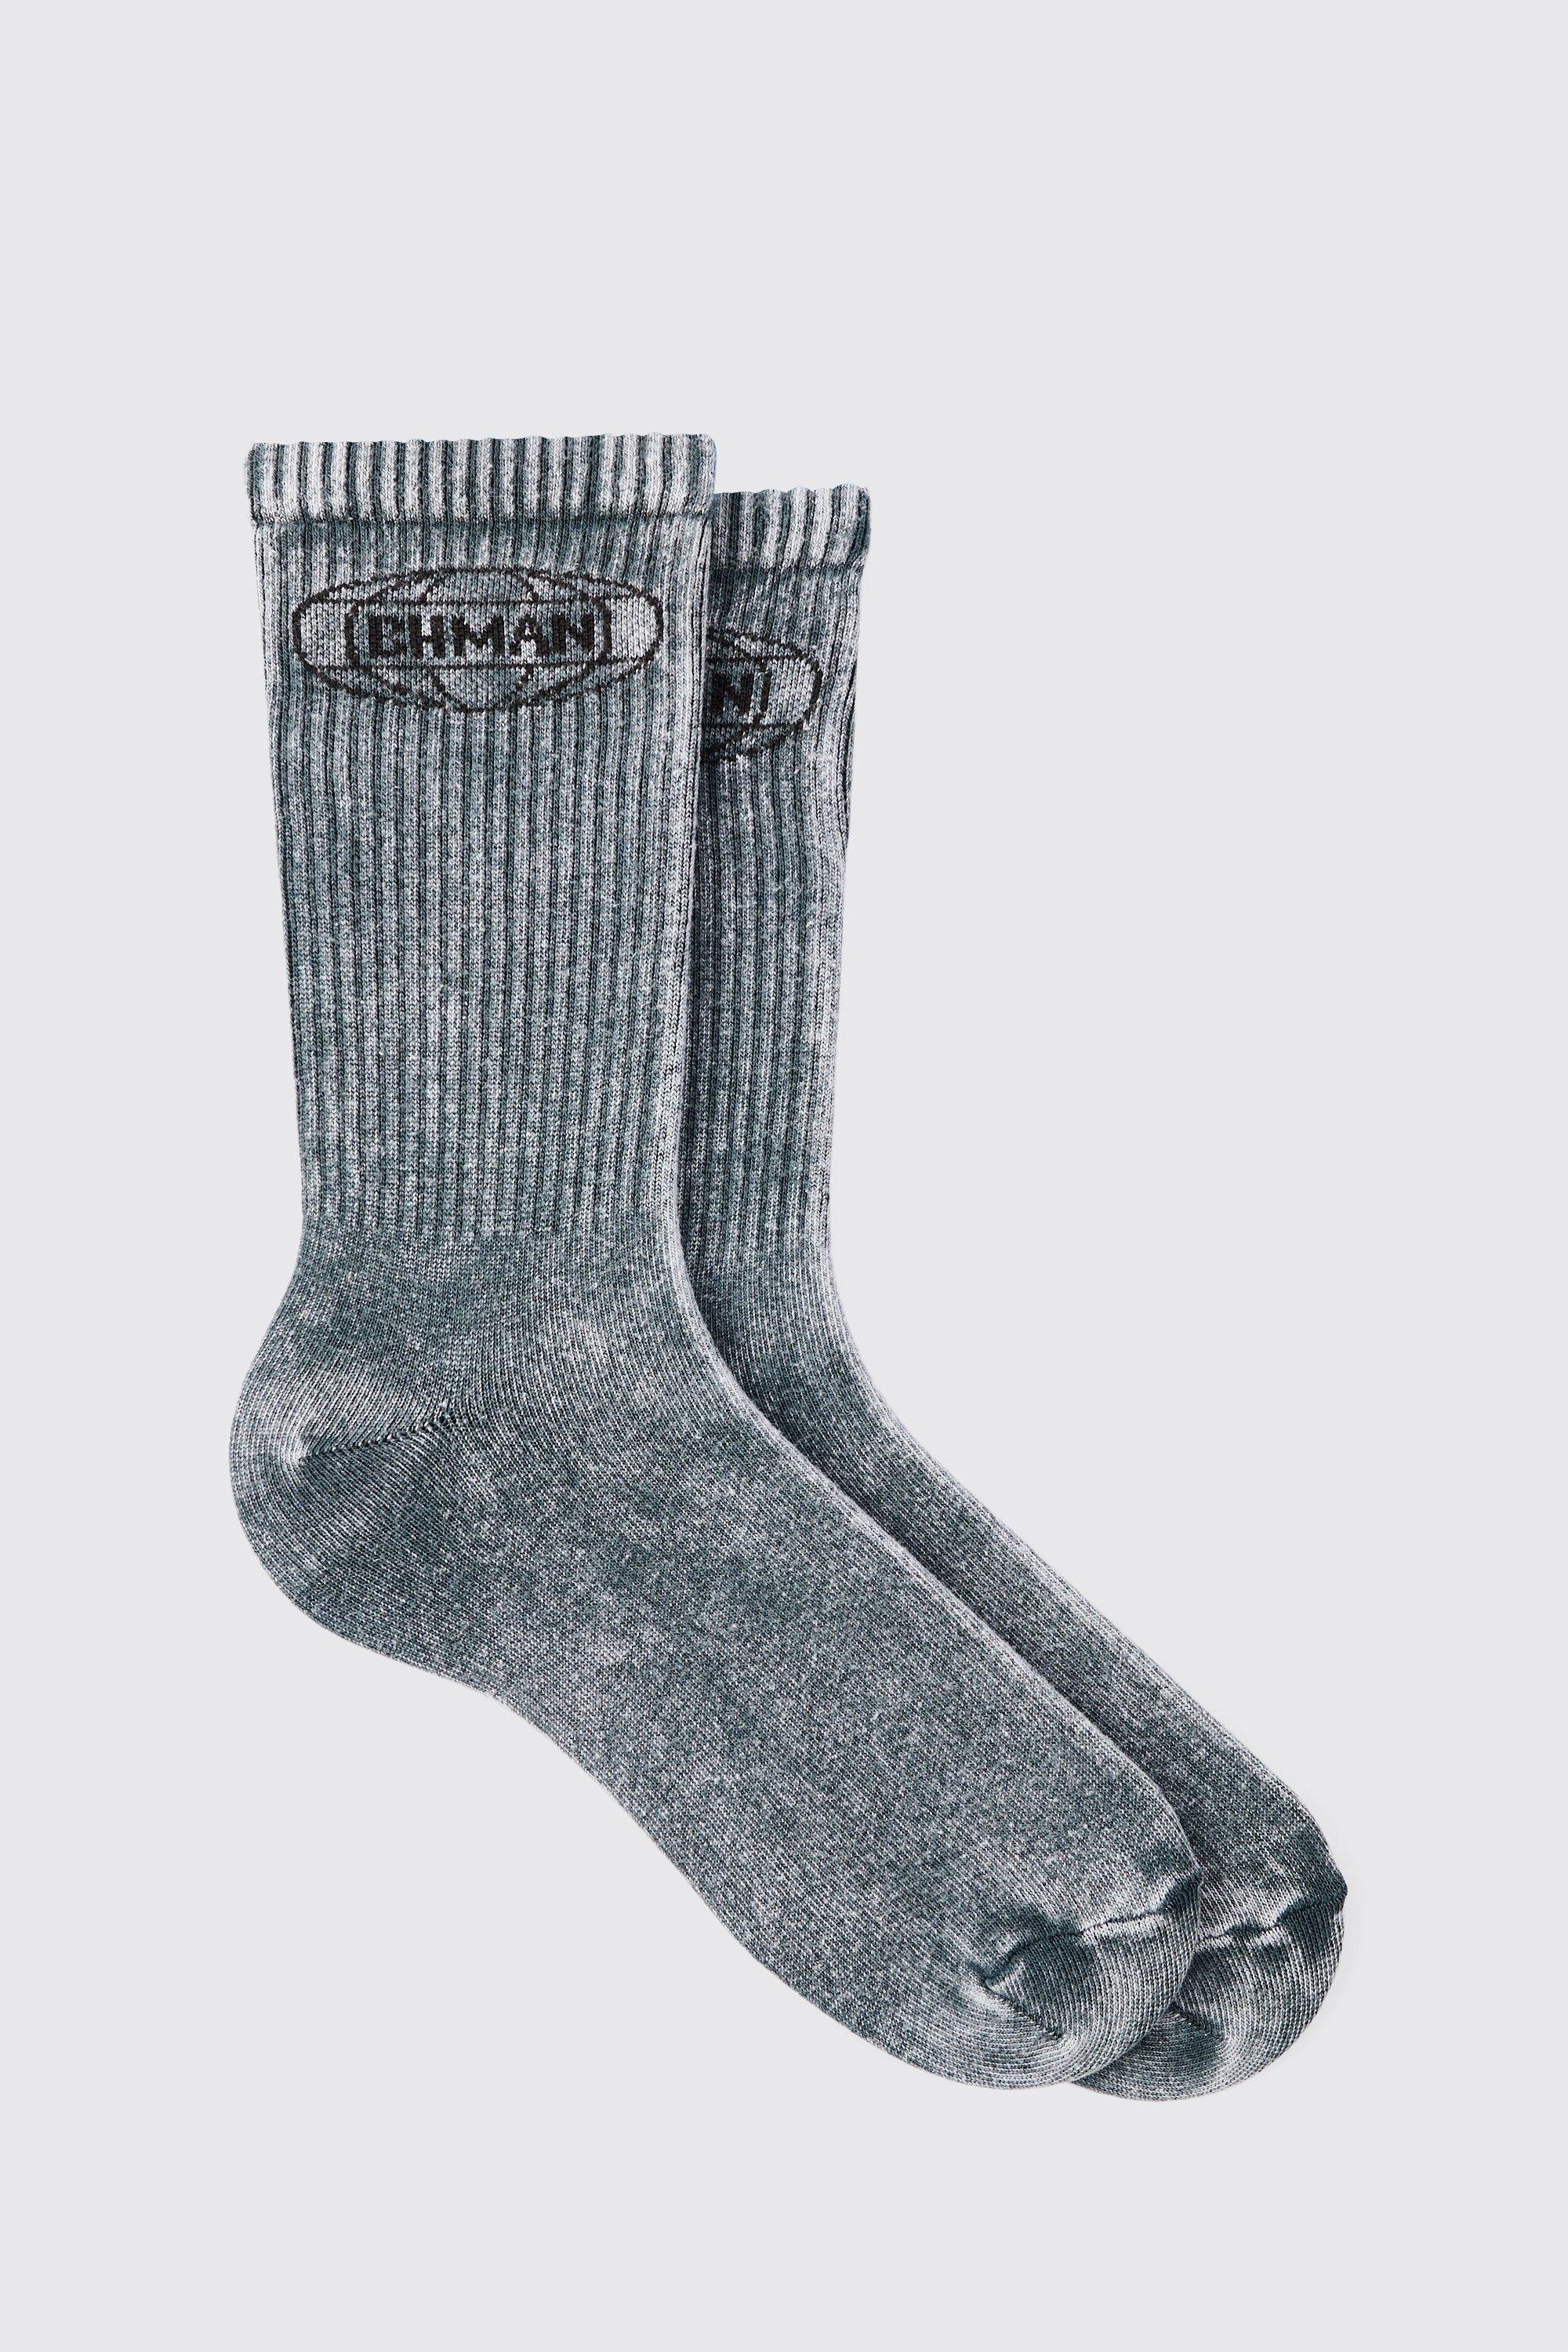 Image of Acid Wash Bhm Socks In Charcoal, Grigio